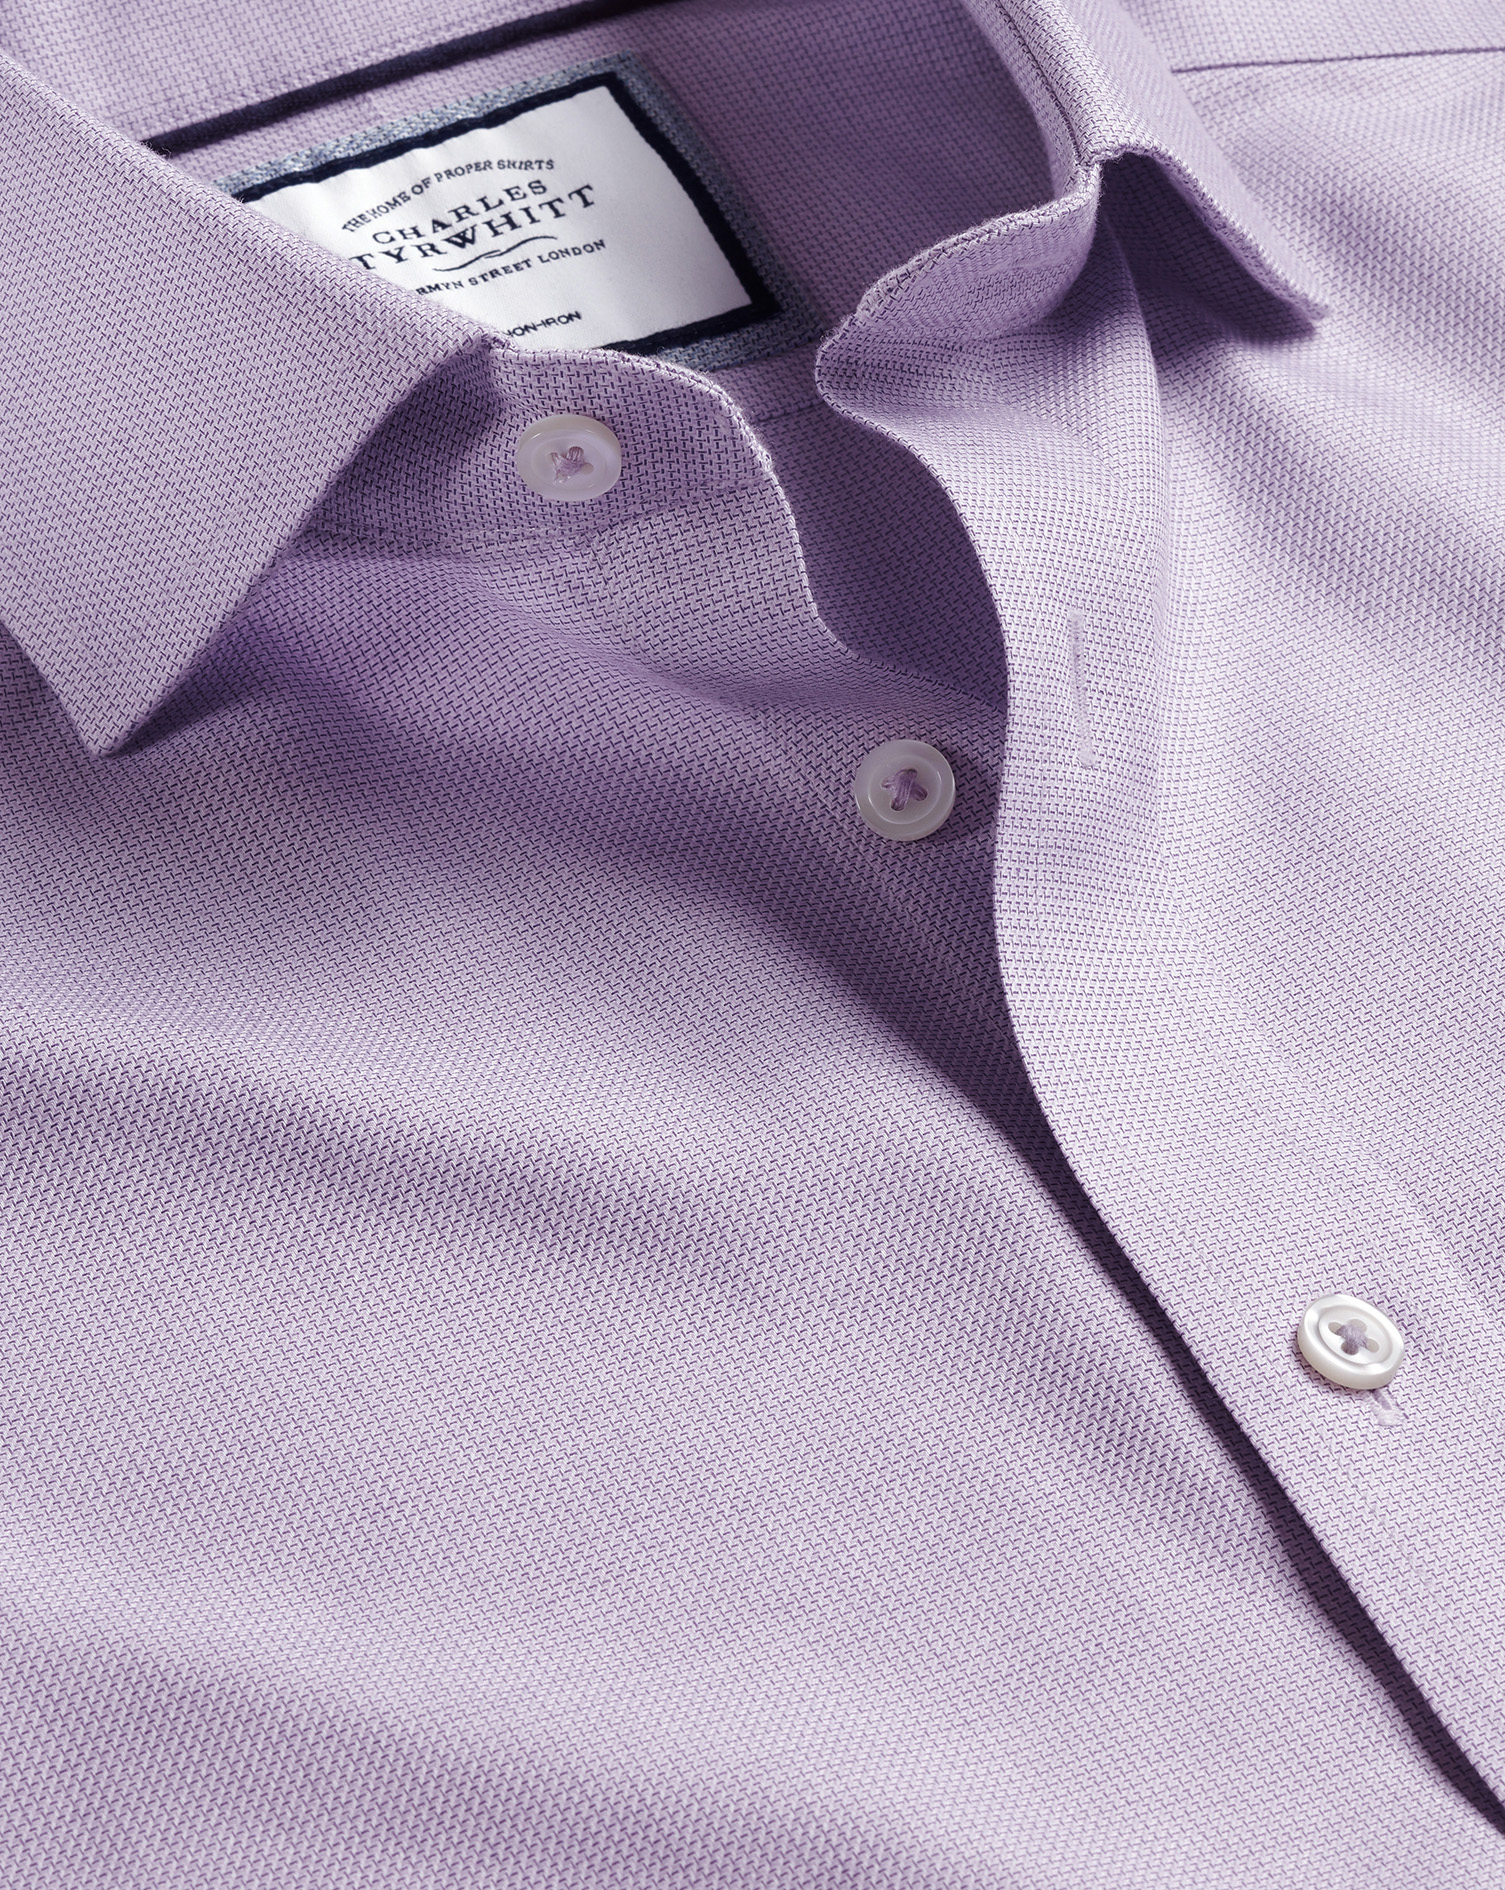 Spread collar Non-Iron Richmond Weave Shirt - Mauve | Charles Tyrwhitt